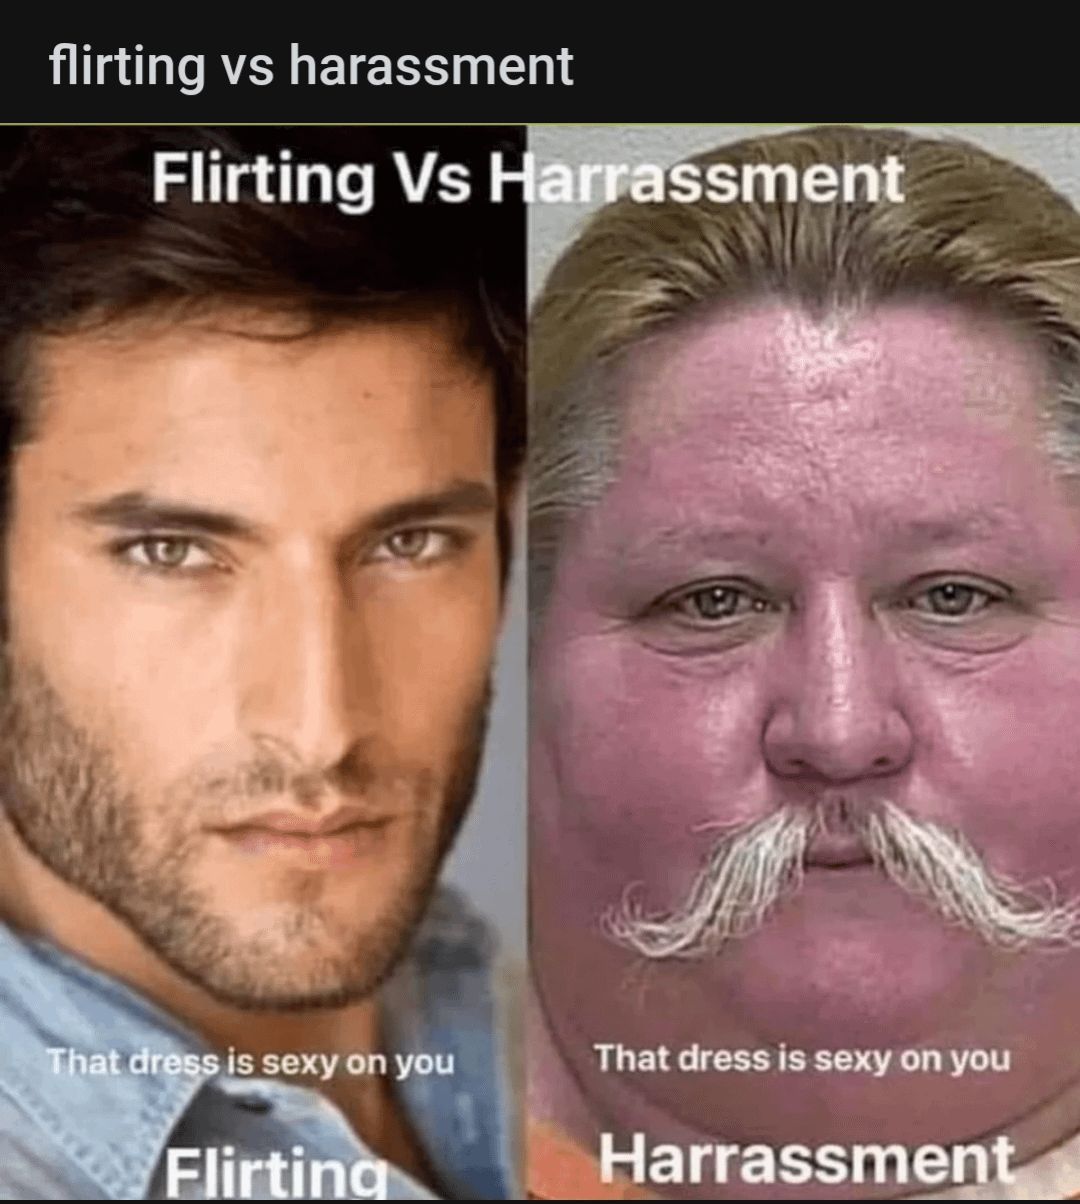 flirting-vs-harassment-v0-bxx8m2zxs98a1.png